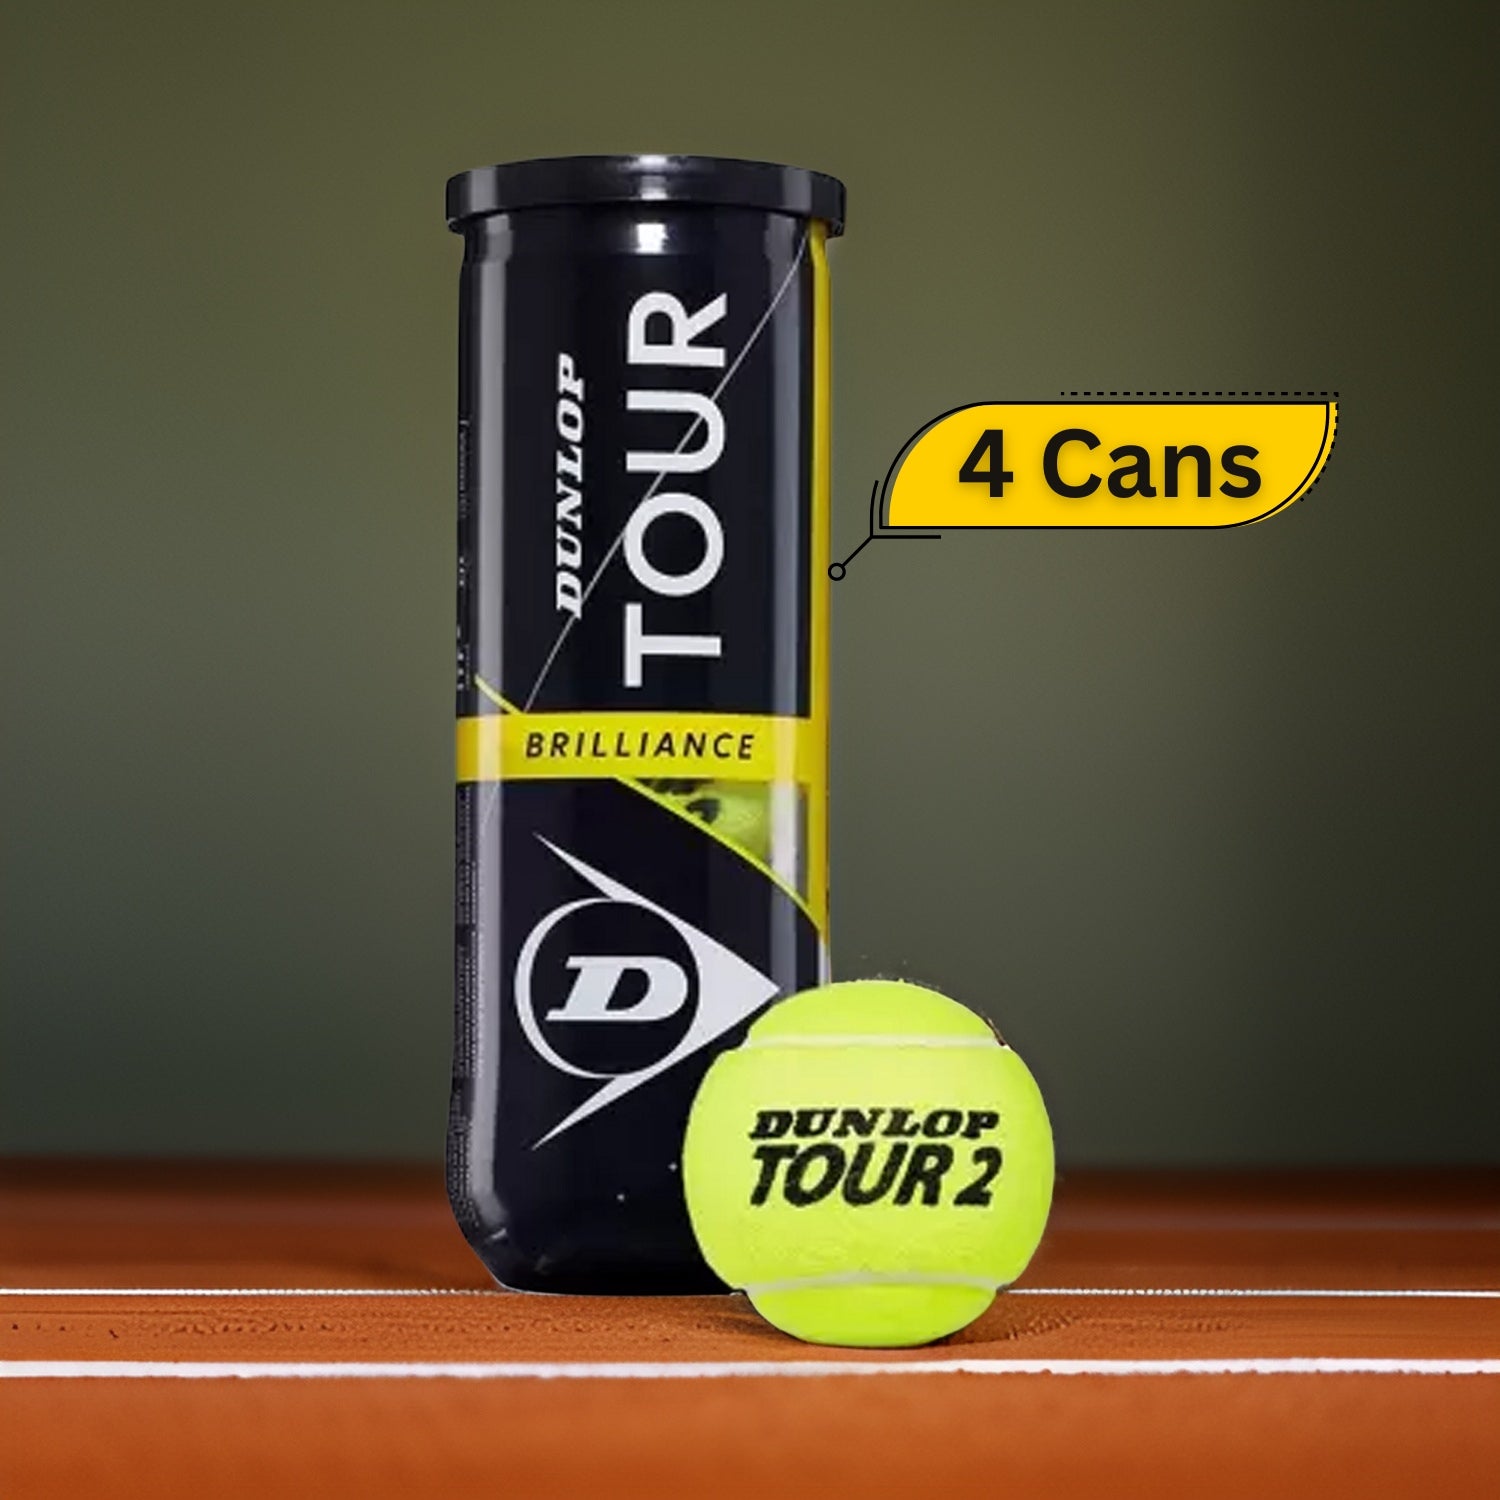 Dunlop Tour Brilliance Tennis Balls Dozen (4 Cans) - Best Price online Prokicksports.com